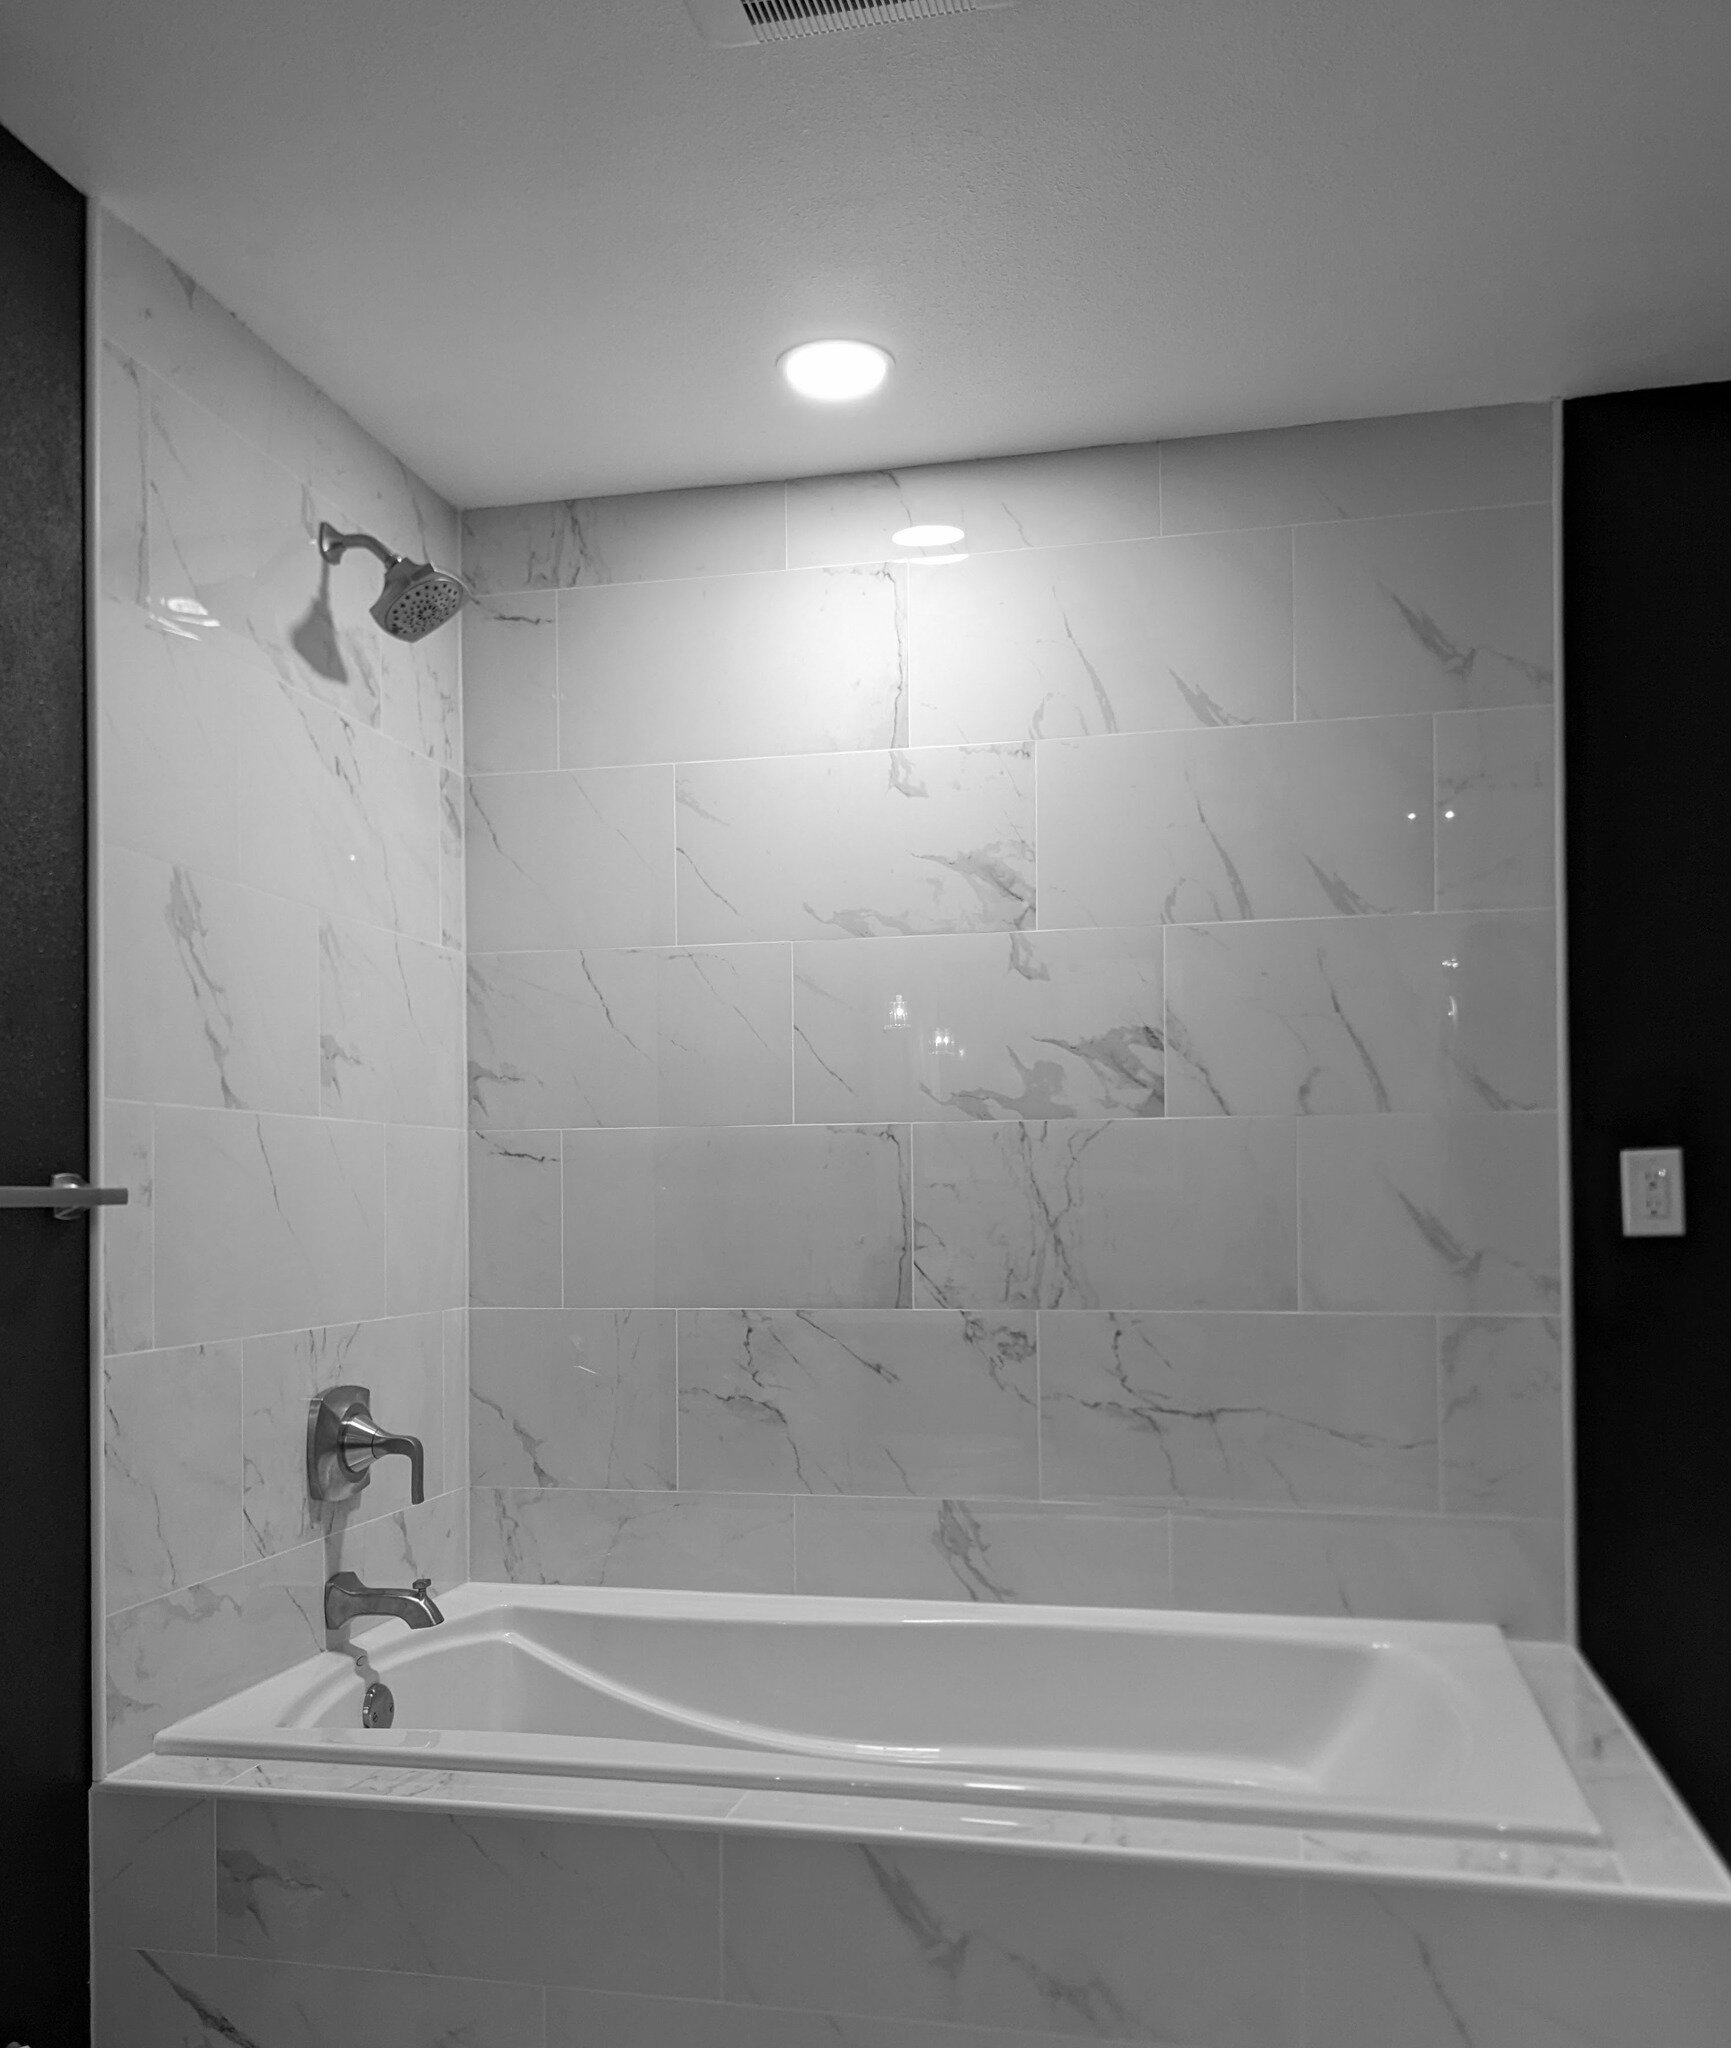 Marble look tile is one of great options for tub surrounding.

#grandresidence #edmondswa #seattle #edmondsremodel #remodeling 
#bathroom #bathrooms #bathroomdecor #bathroomideas #bathroomdecor #bathroomdesign #bathroomremodel #bathroomrenovation